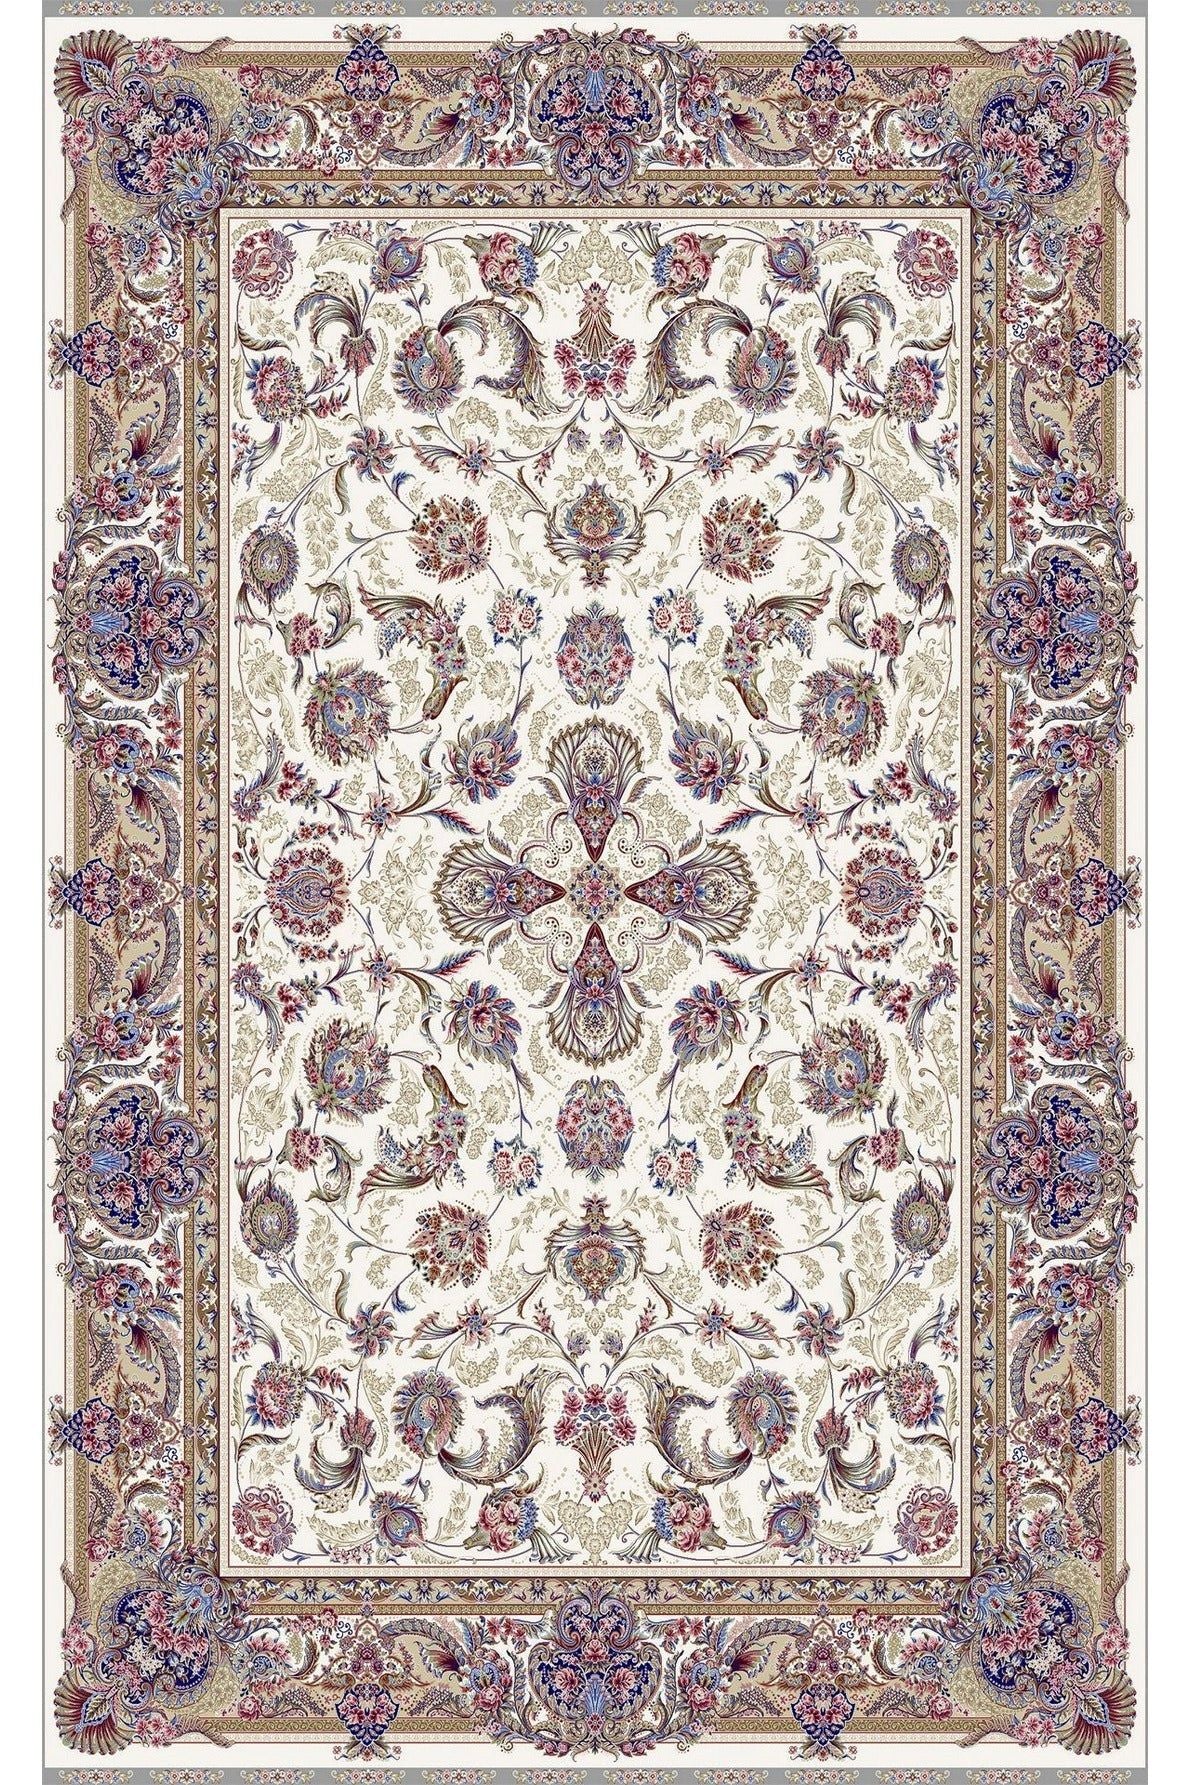 #Turkish_Carpets_Rugs# #Modern_Carpets# #Abrash_Carpets#Isf 01 Cream